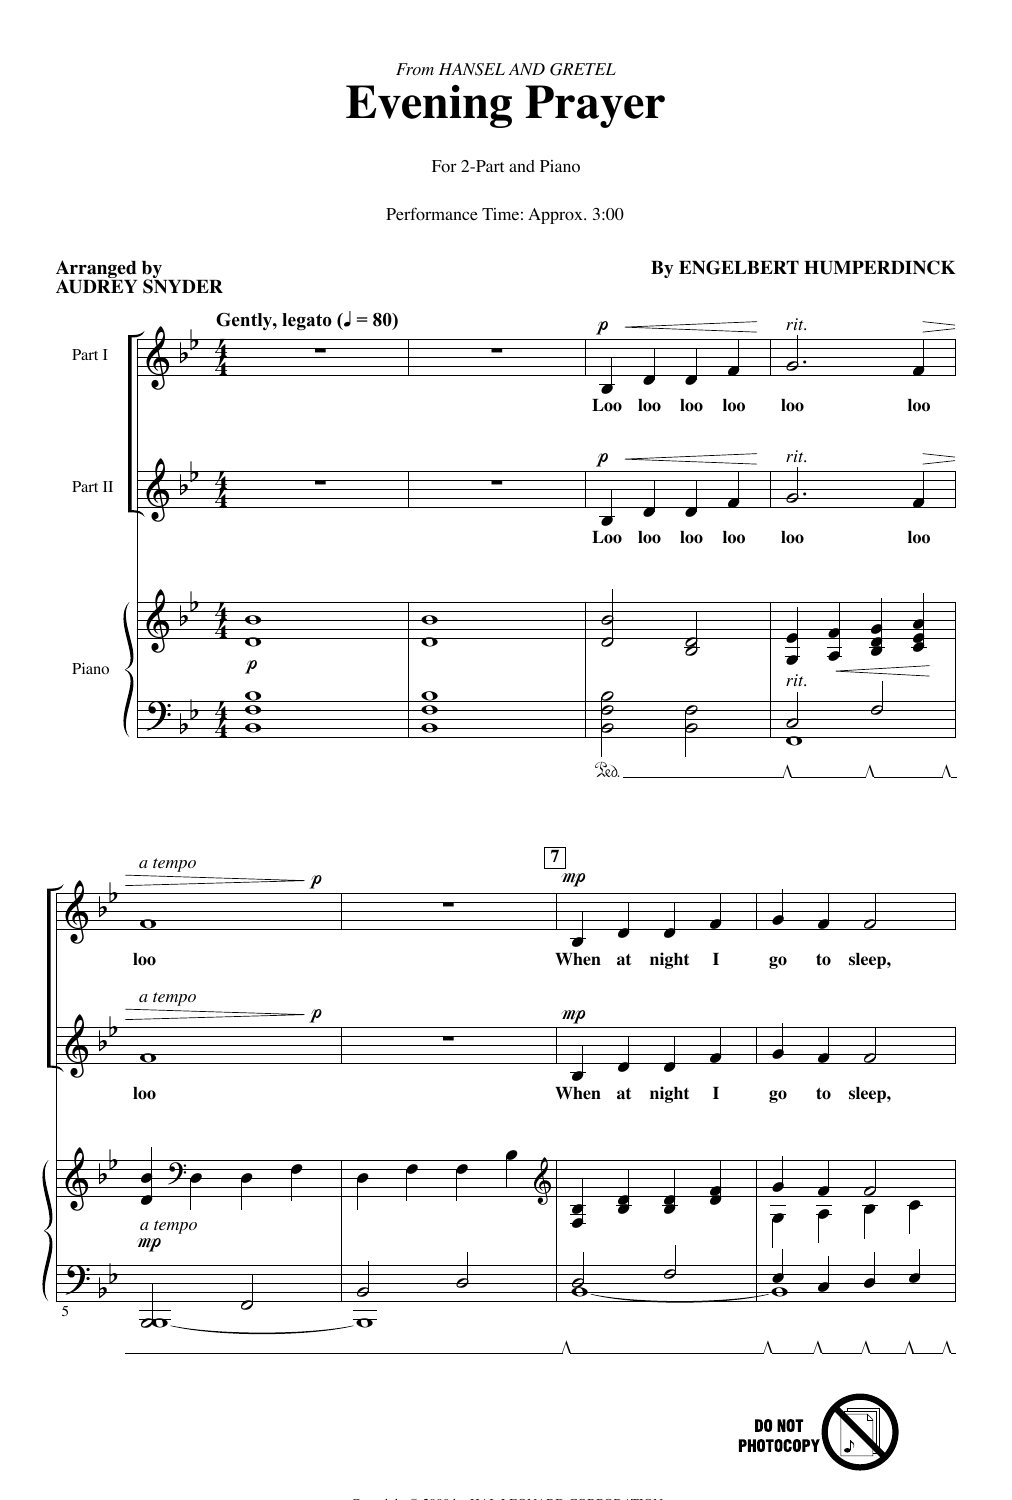 Engelbert Humperdinck Evening Prayer (from Hansel And Gretel) (arr. Audrey Snyder) Sheet Music Notes & Chords for 2-Part Choir - Download or Print PDF